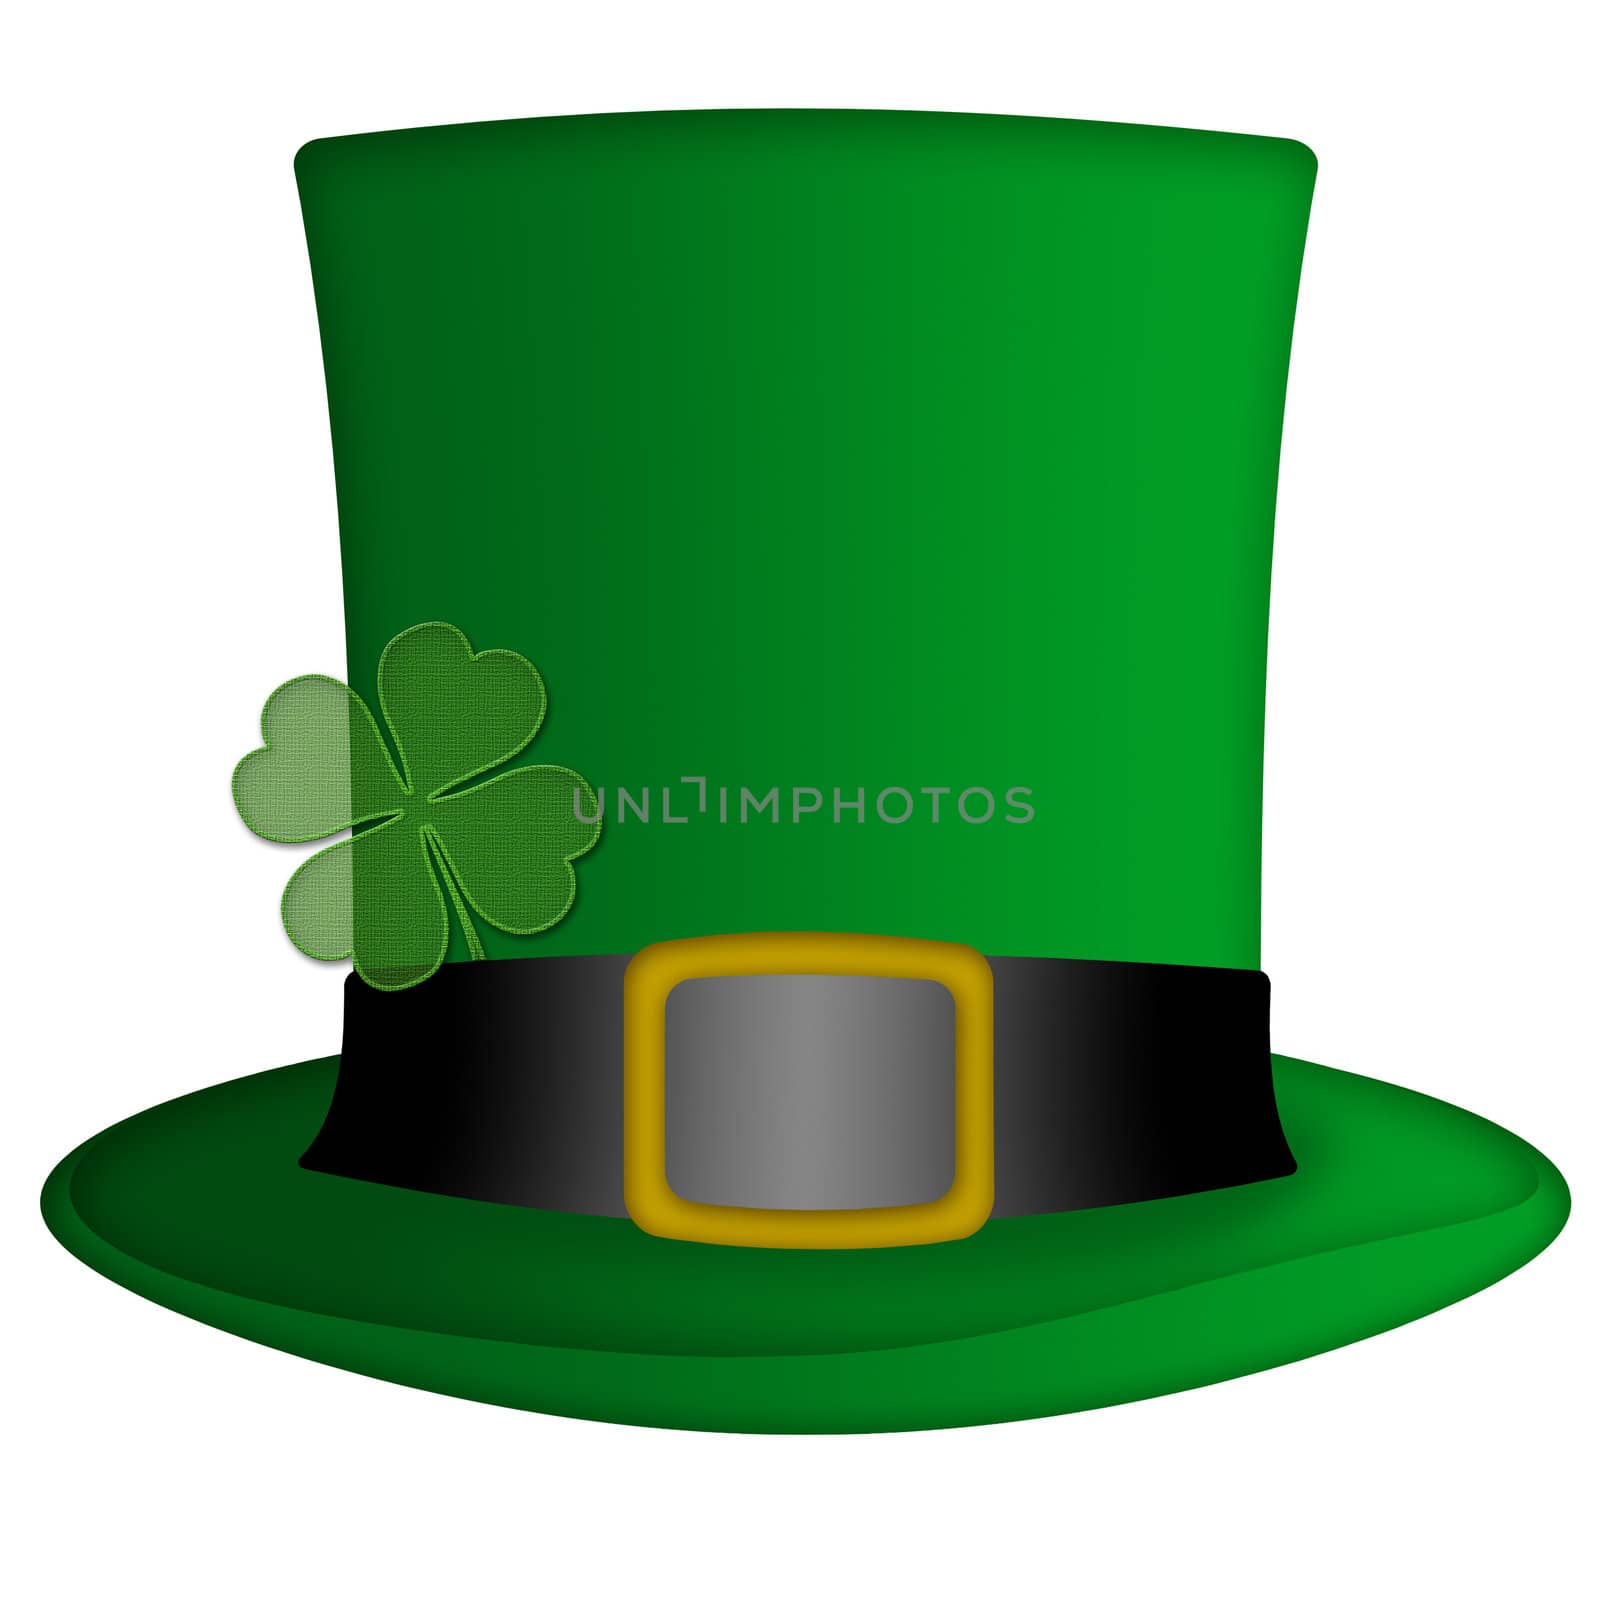 St Patricks Day Irish Leprechaun Hat by Davidgn